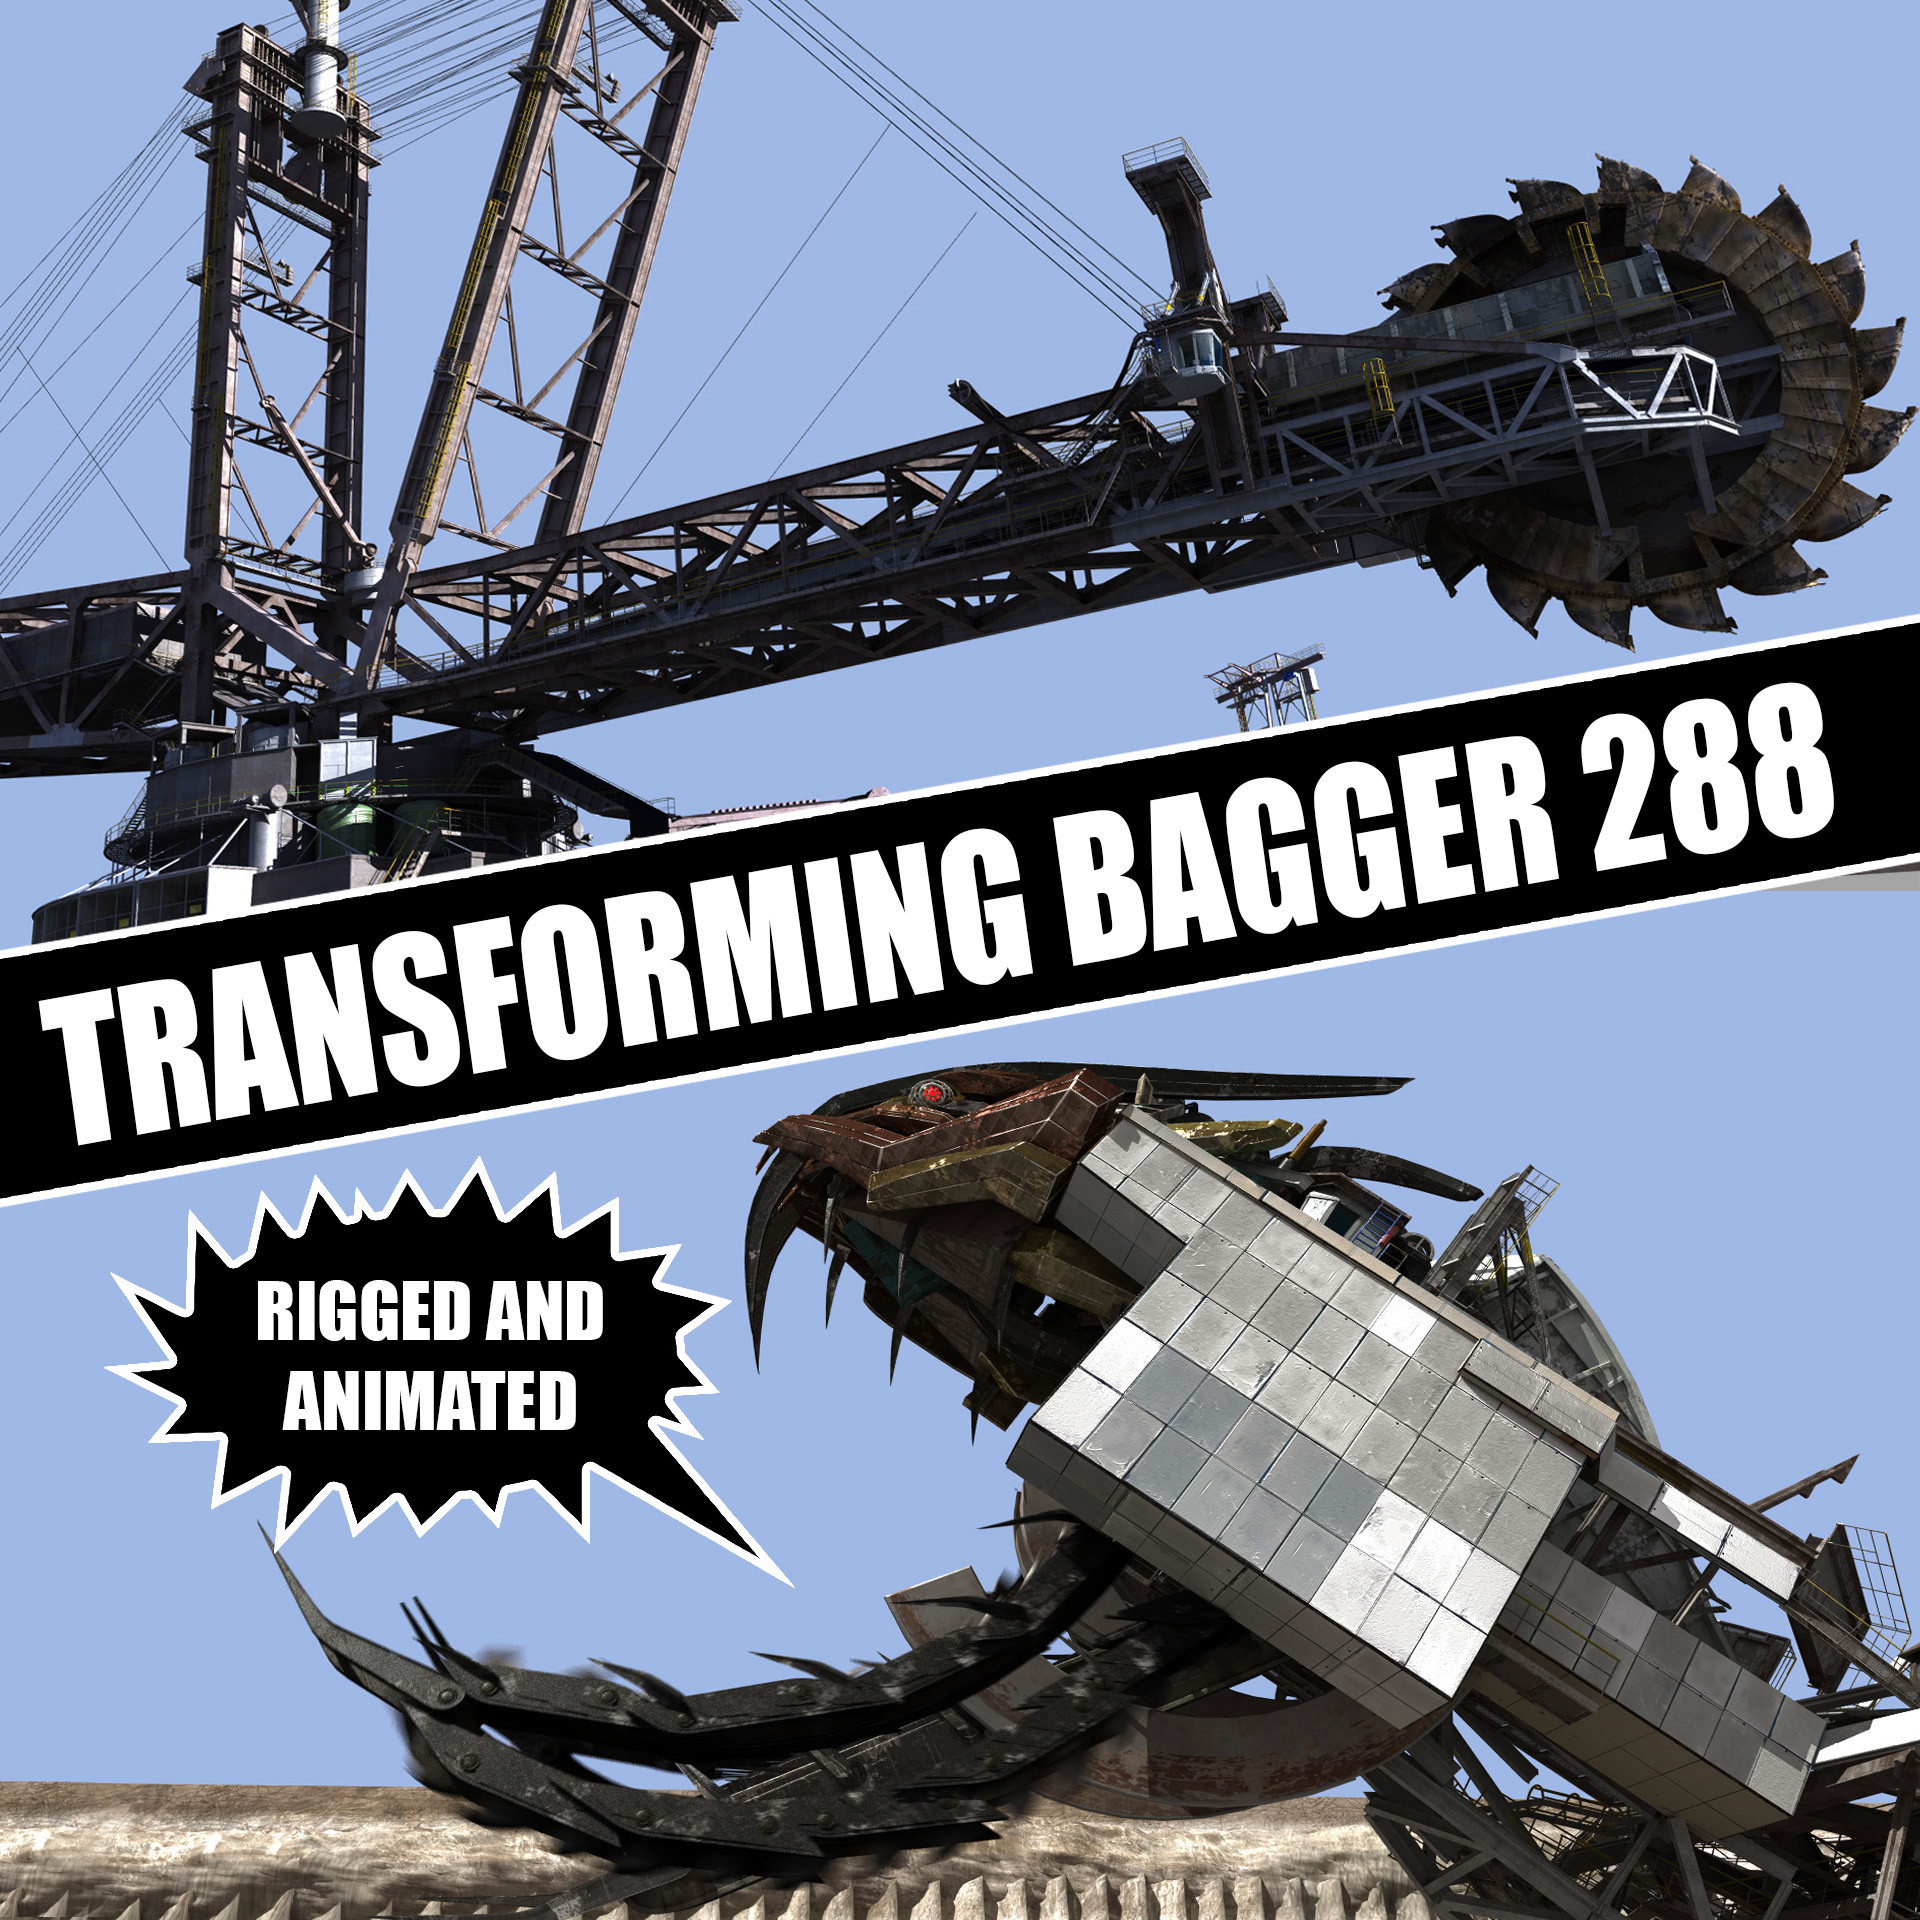 Bagger 288 #21